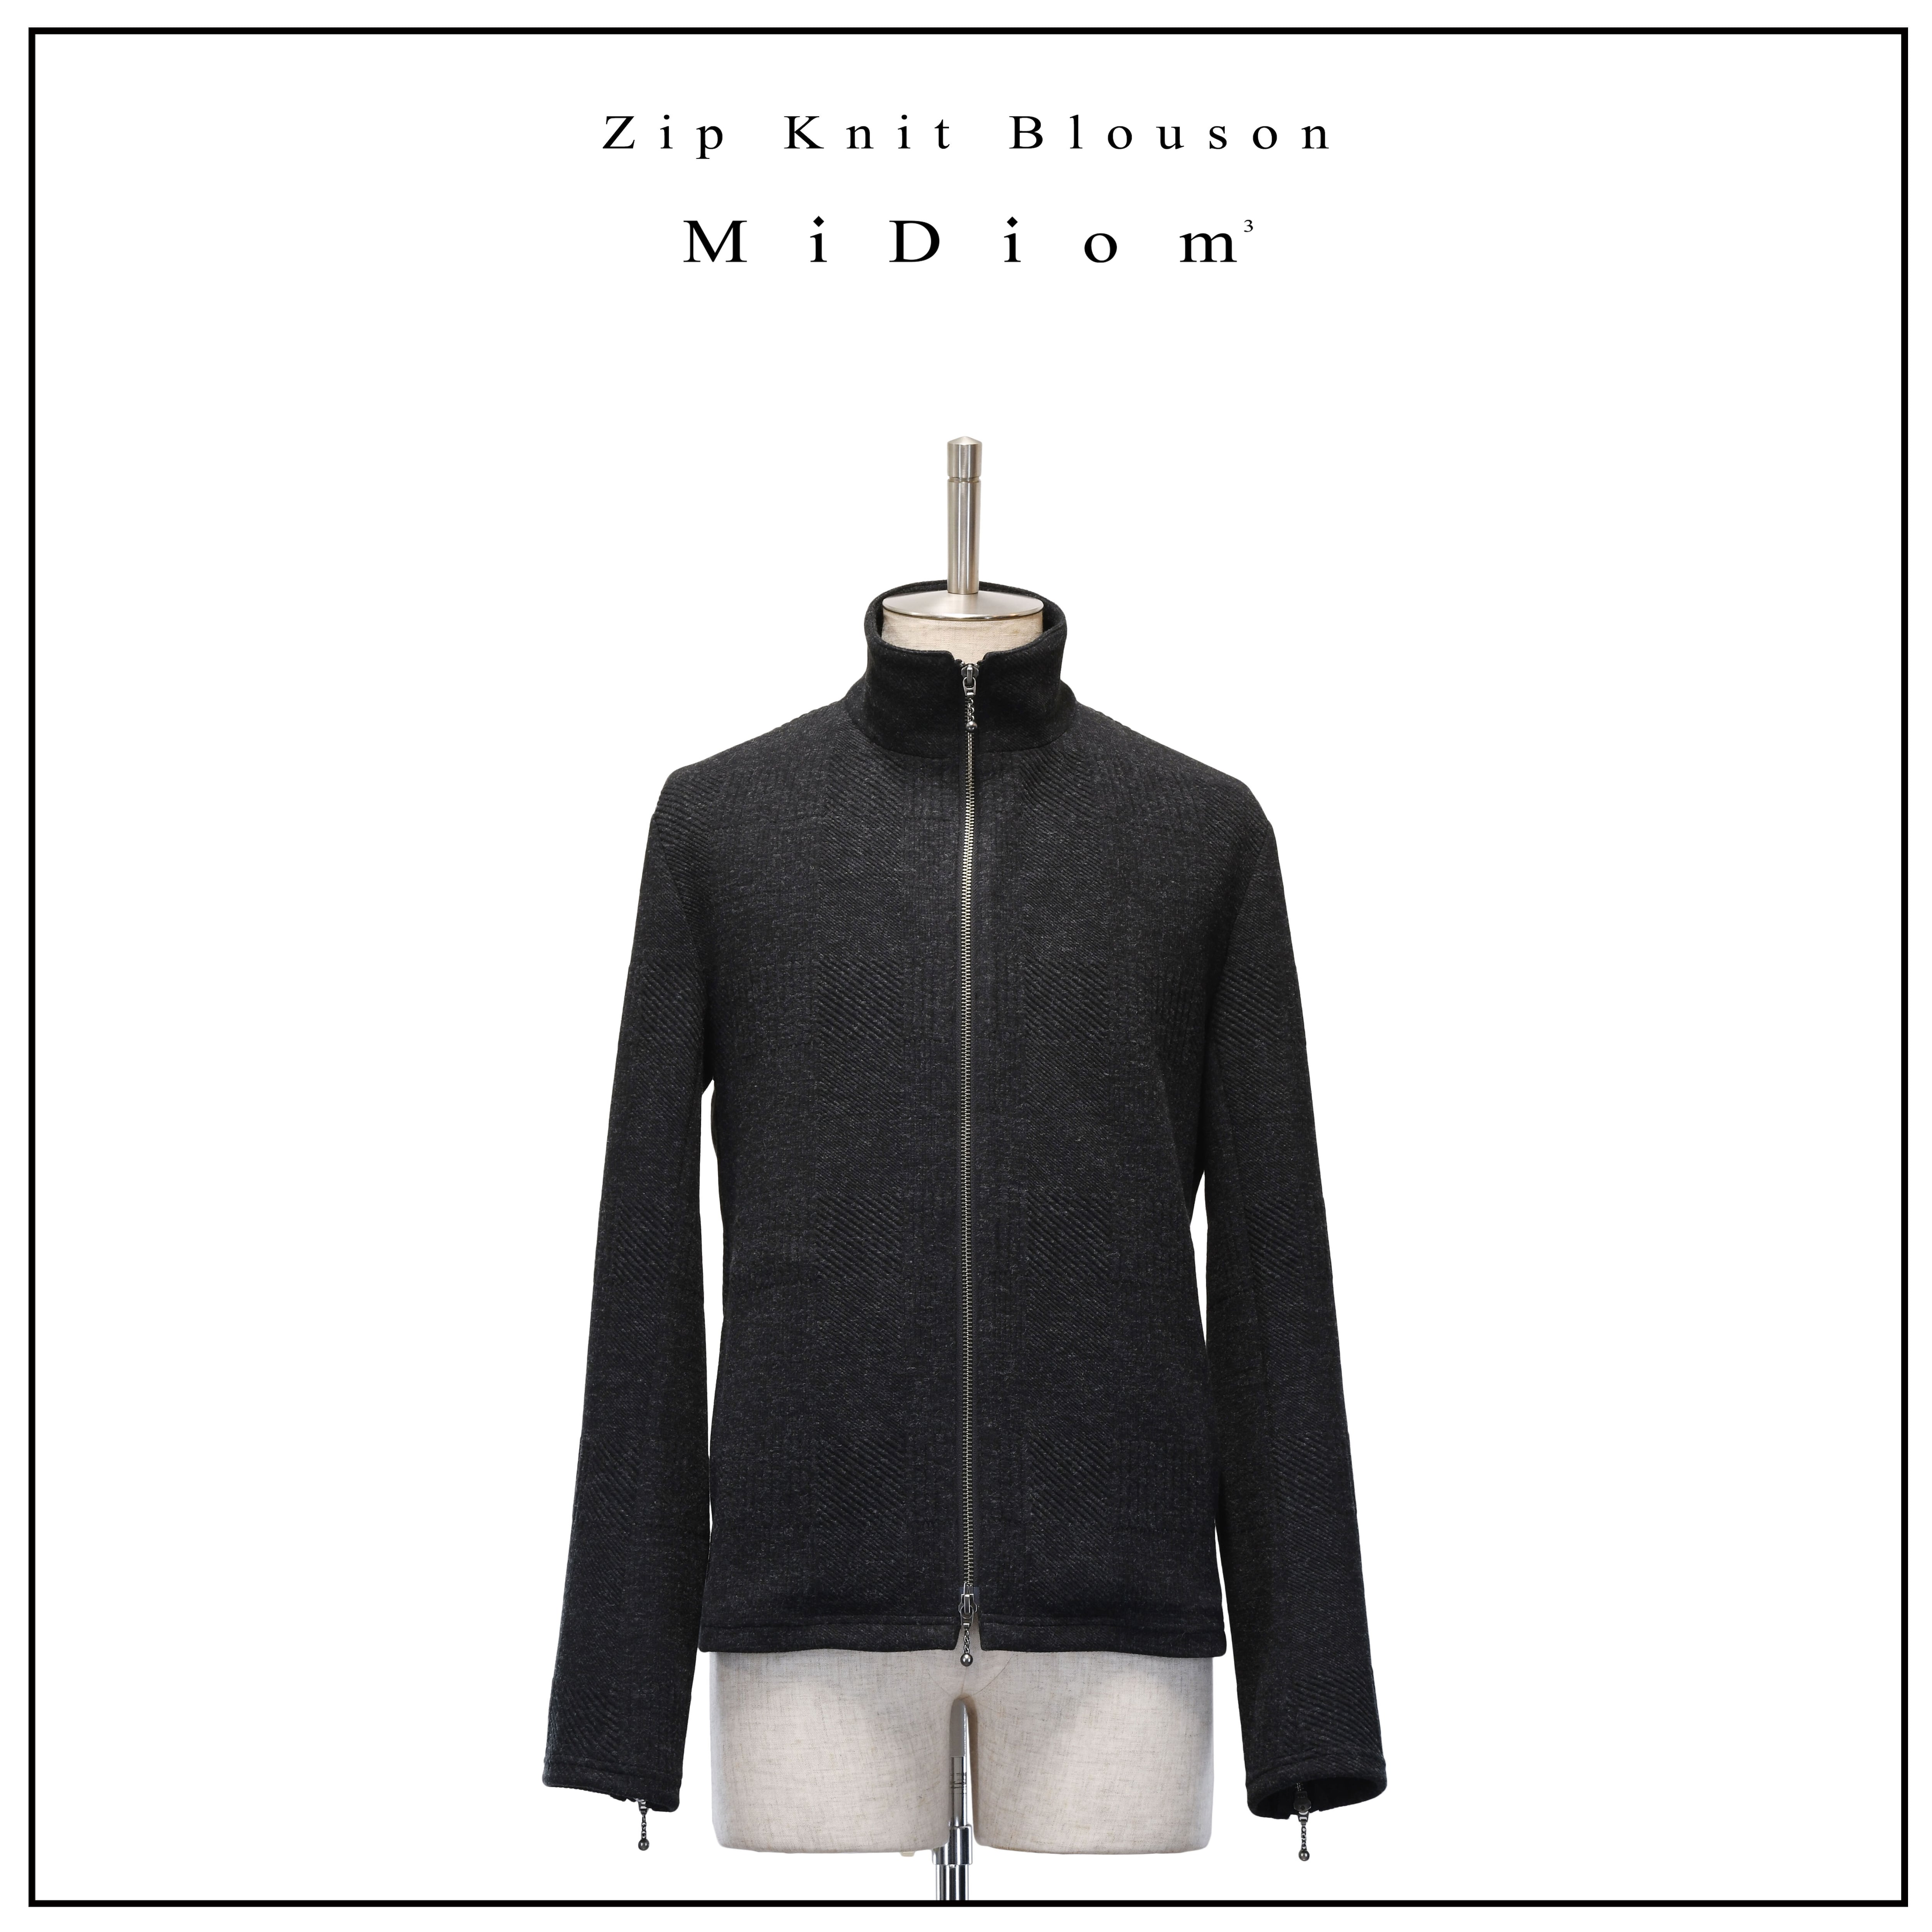 Zip Knit Blouson | MiDiom | ロリータ ゴスロリ ゴシックファッション